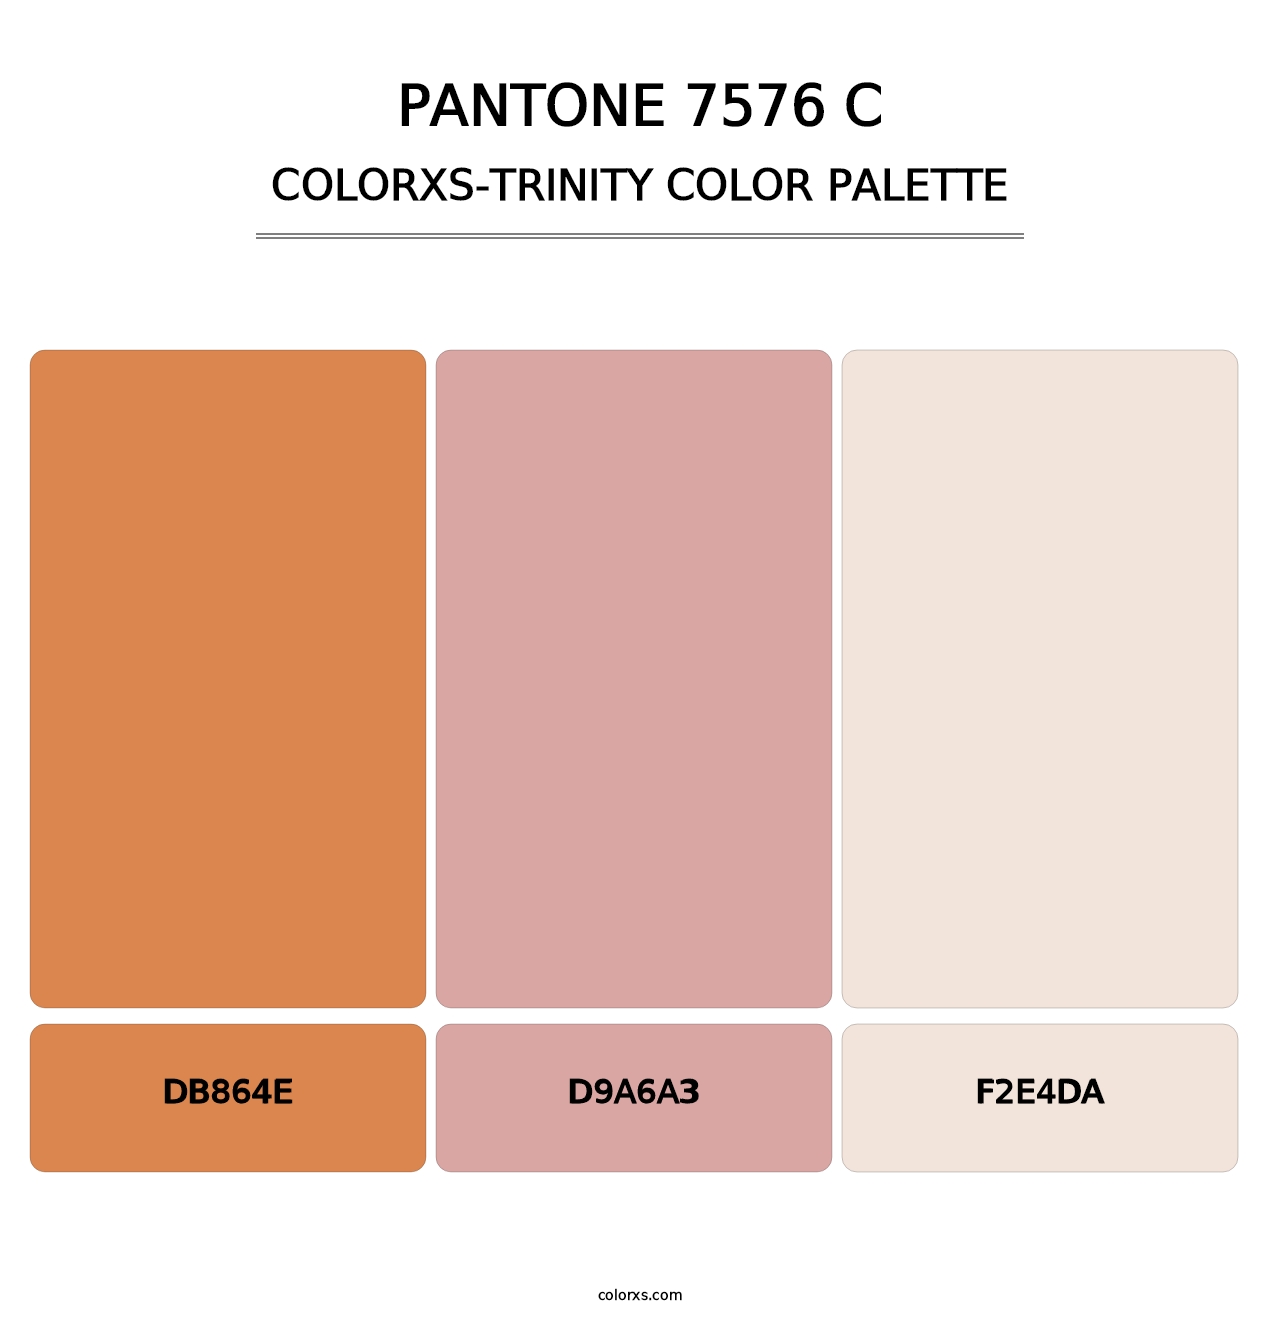 PANTONE 7576 C - Colorxs Trinity Palette